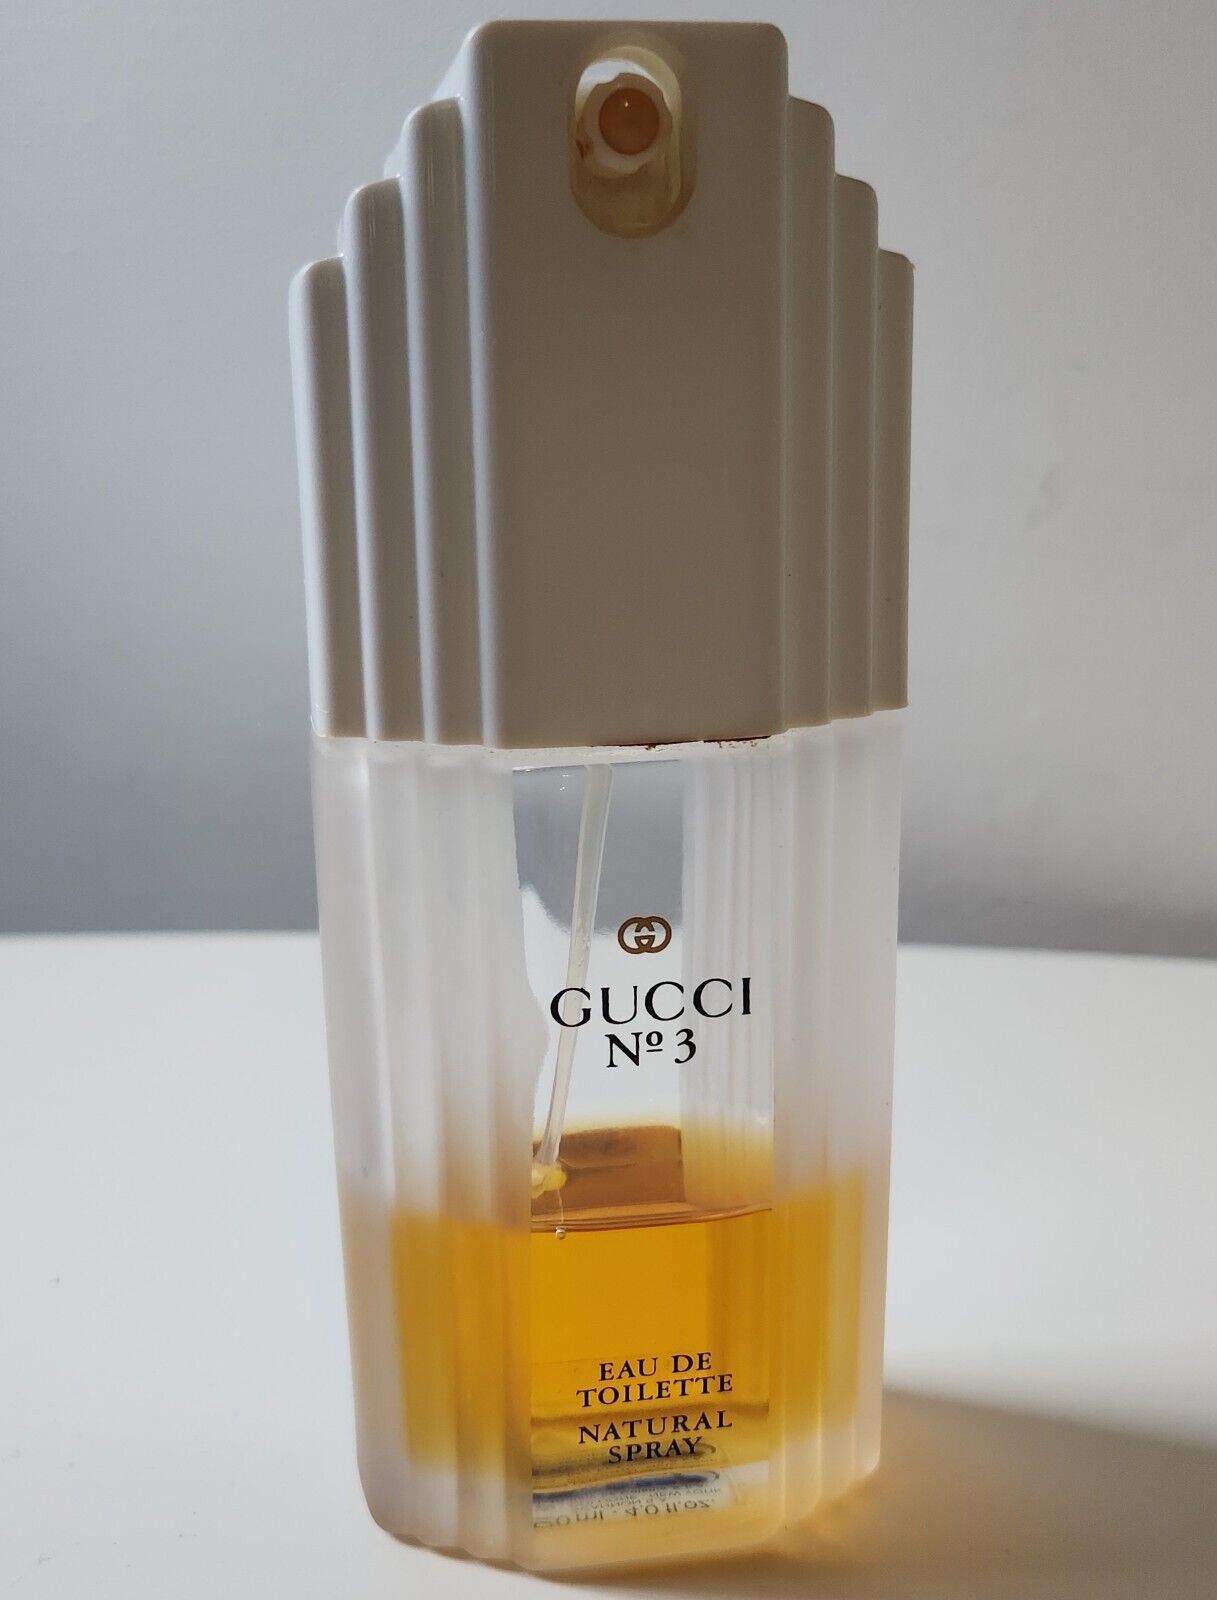 Gucci No 3 Eau de Toilette Natural Spray 120 ml - 4.0 fl oz Women\'s Perfume